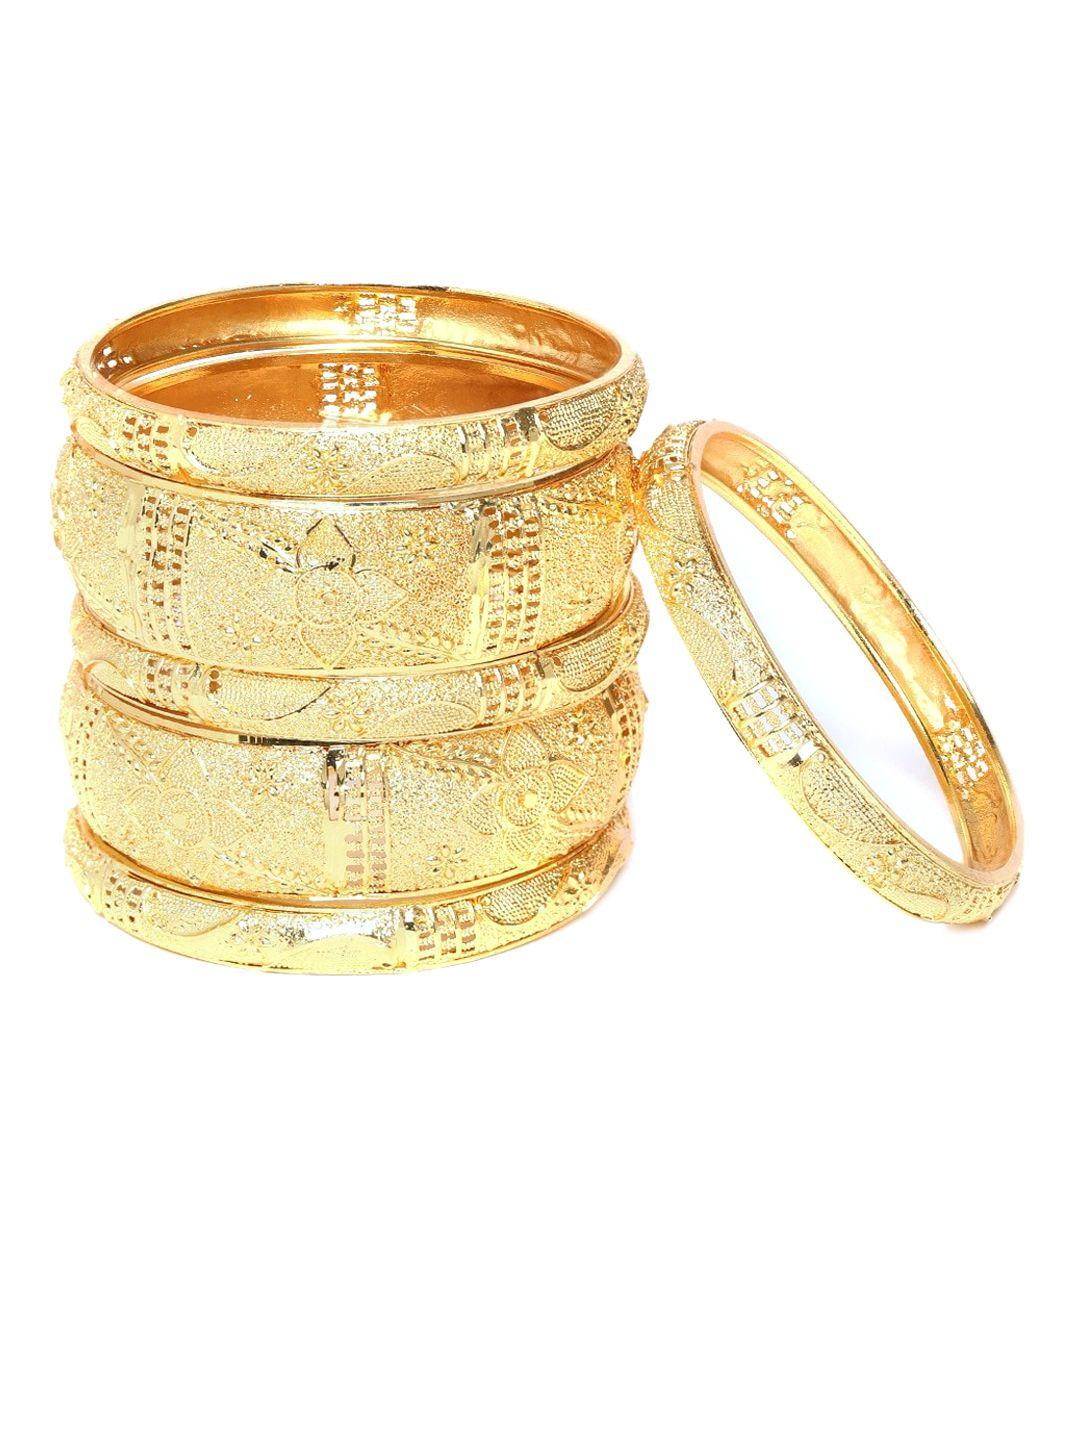 youbella set of 6 gold-plated floral patterned bangles